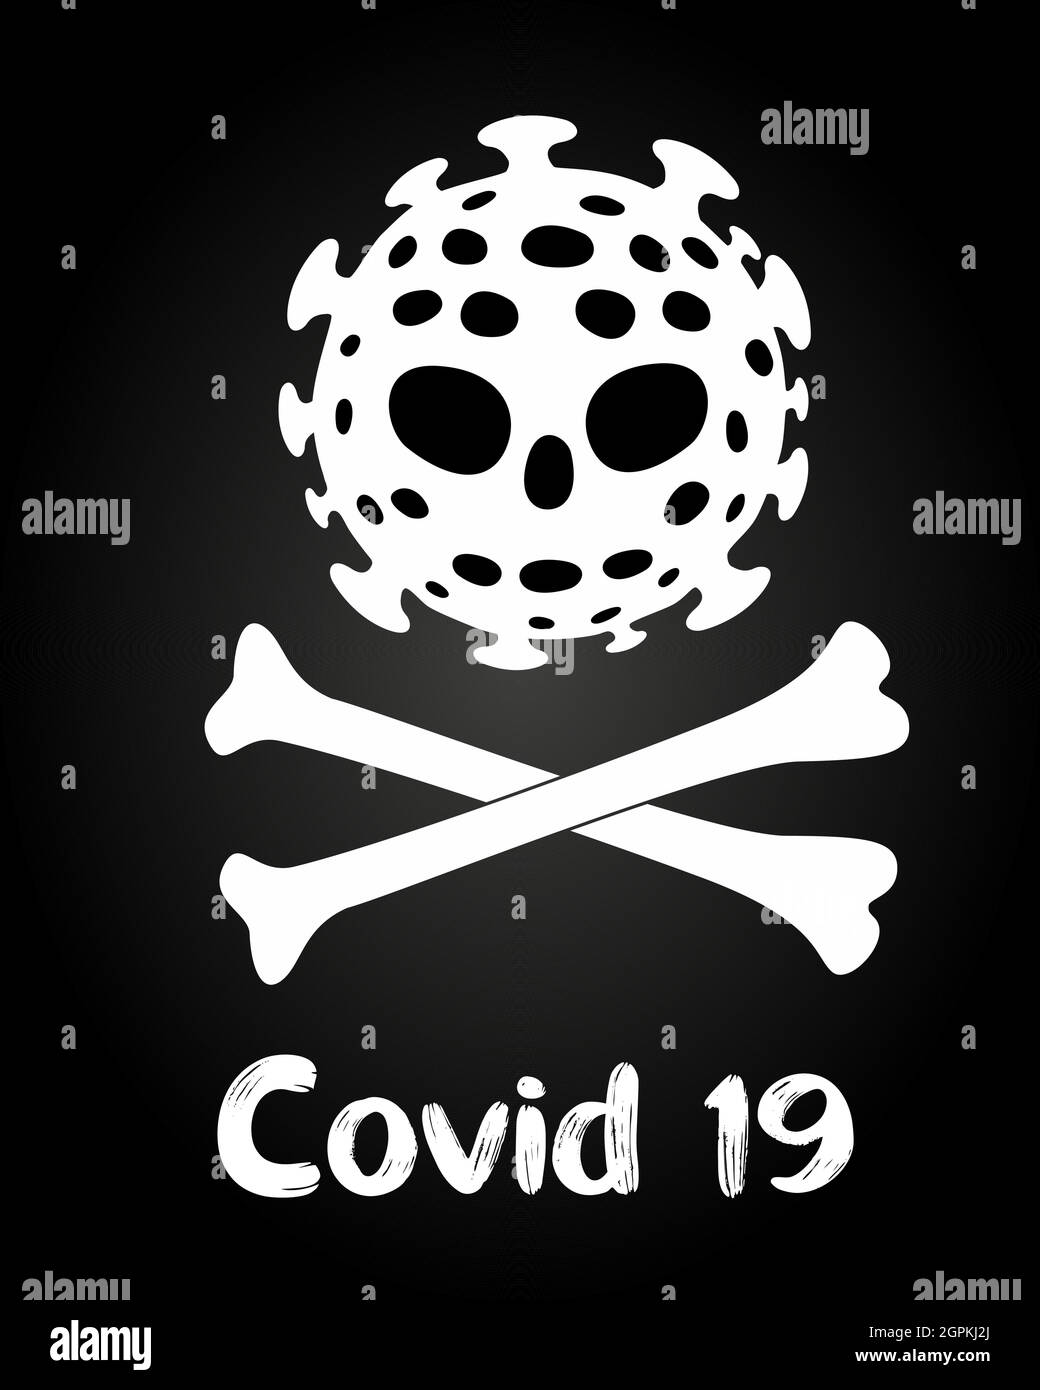 Coronavirus virus infection pirate sign. COVID-19 - virus - human white skull and bones sketch. Sign symbol. Black background Isolated vector illustration. Stock Vector